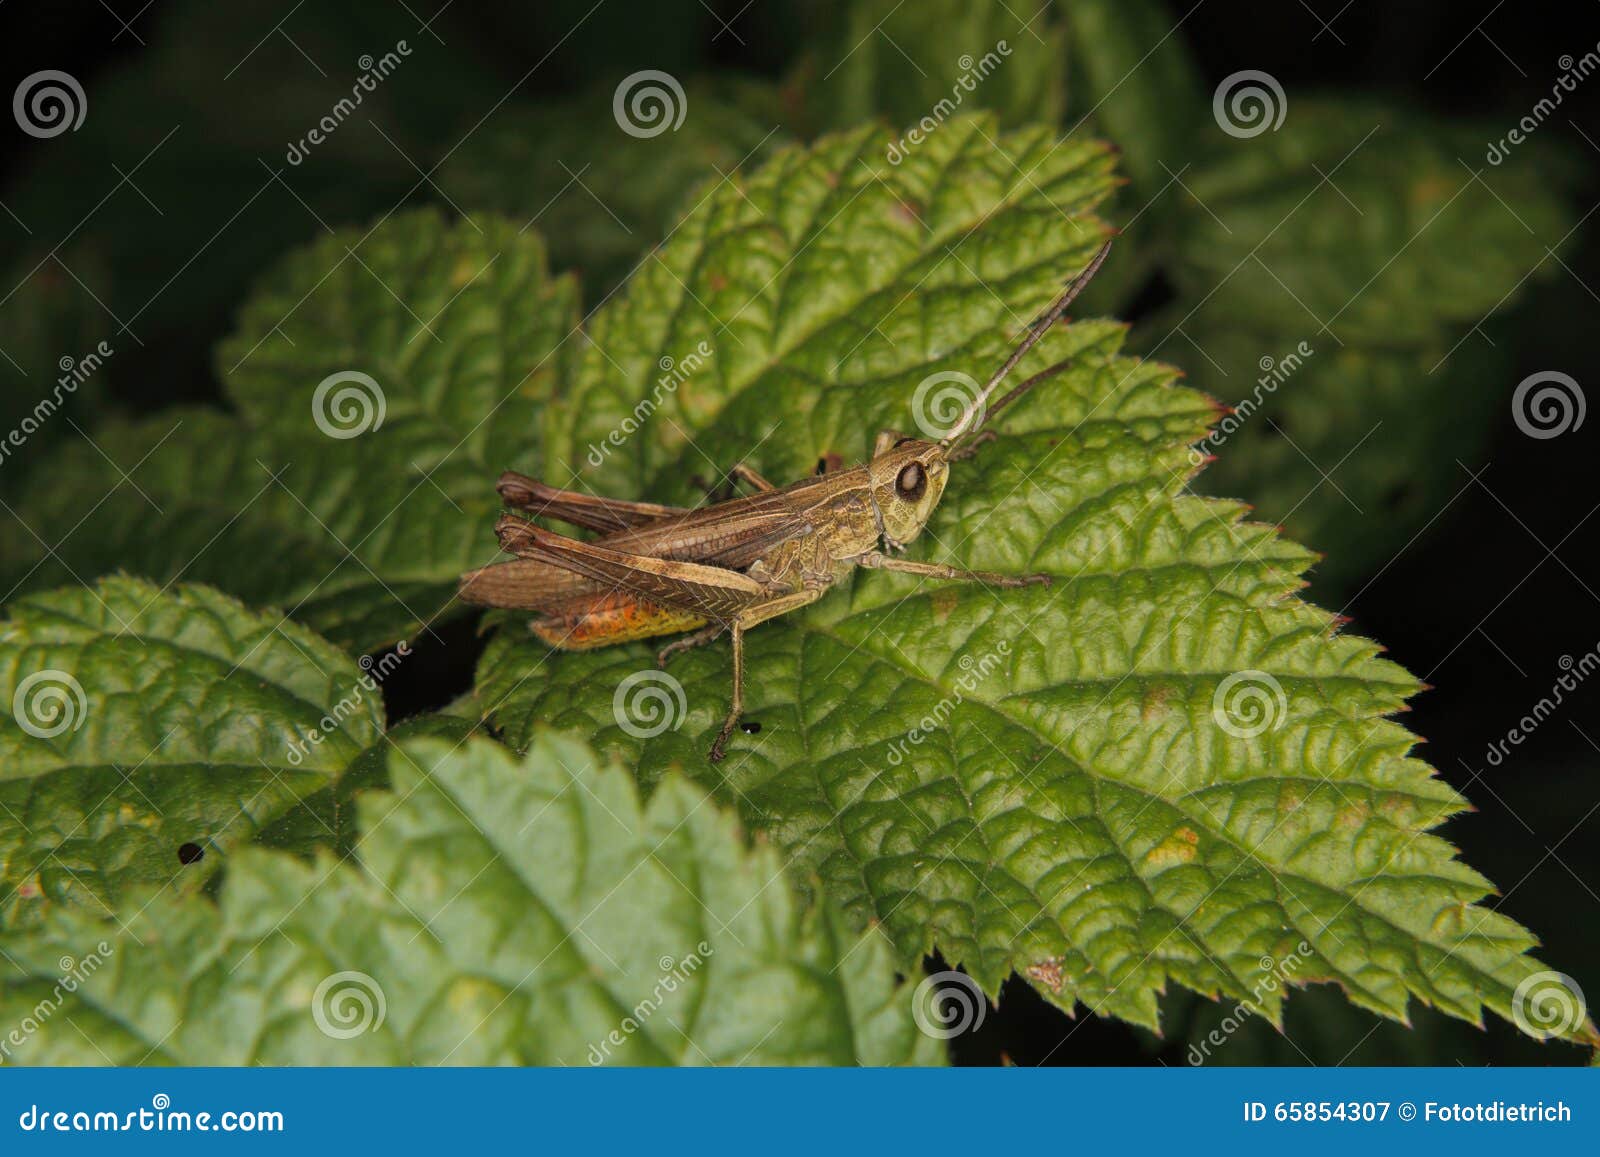 common field grasshopper (chorthippus brunneus)